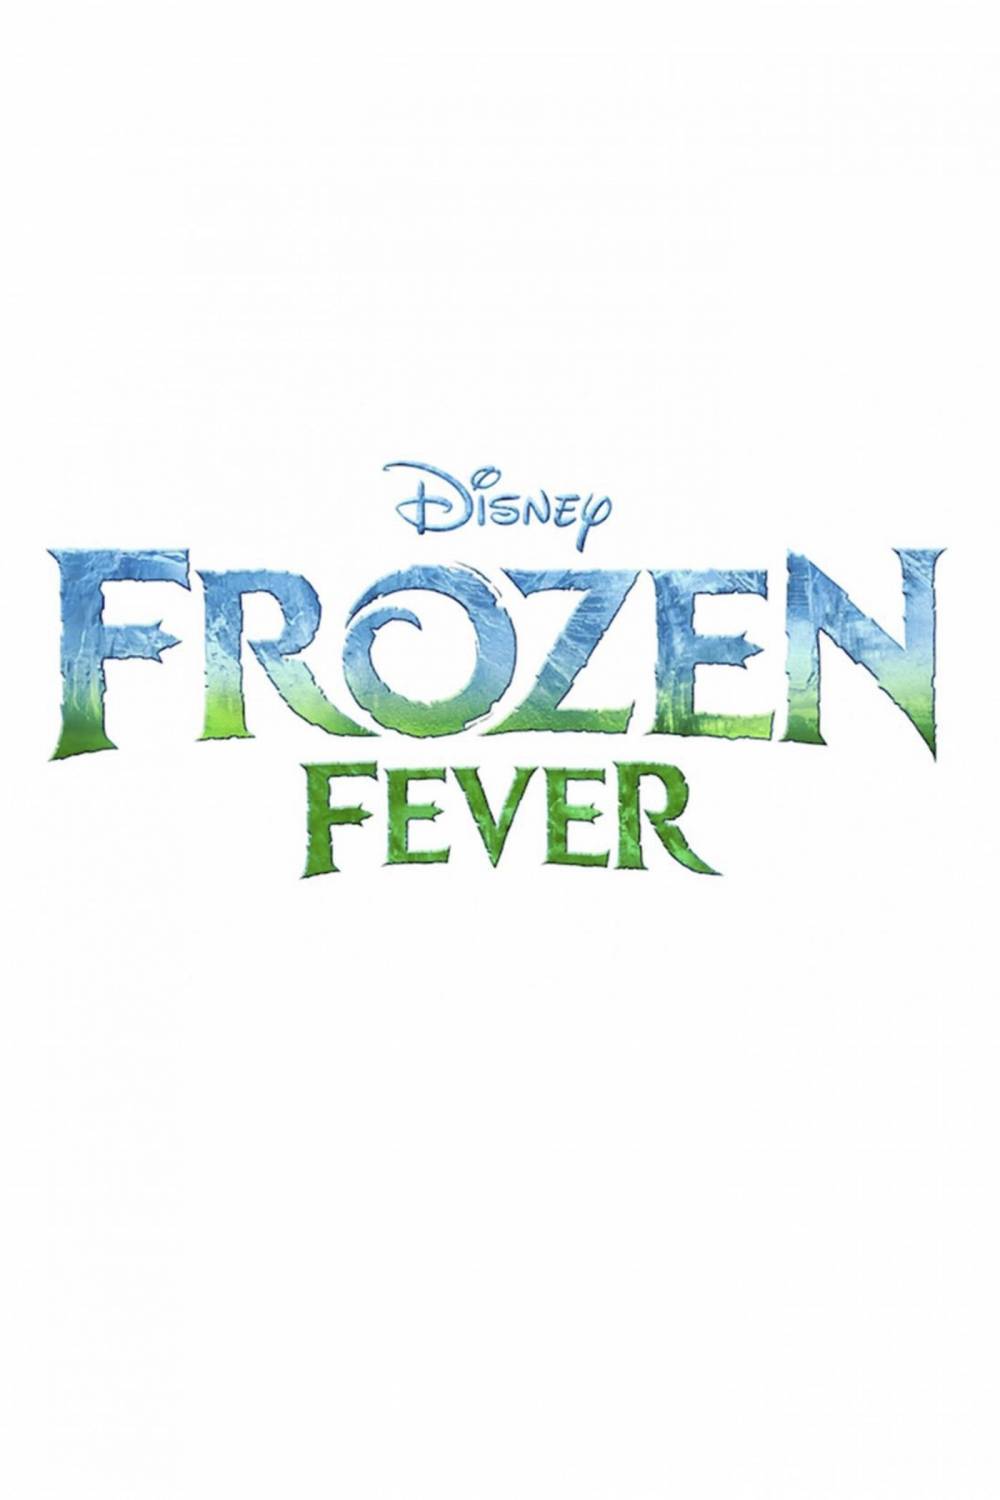 Filmas Ledo šalies karštinė / Frozen Fever (2015) online